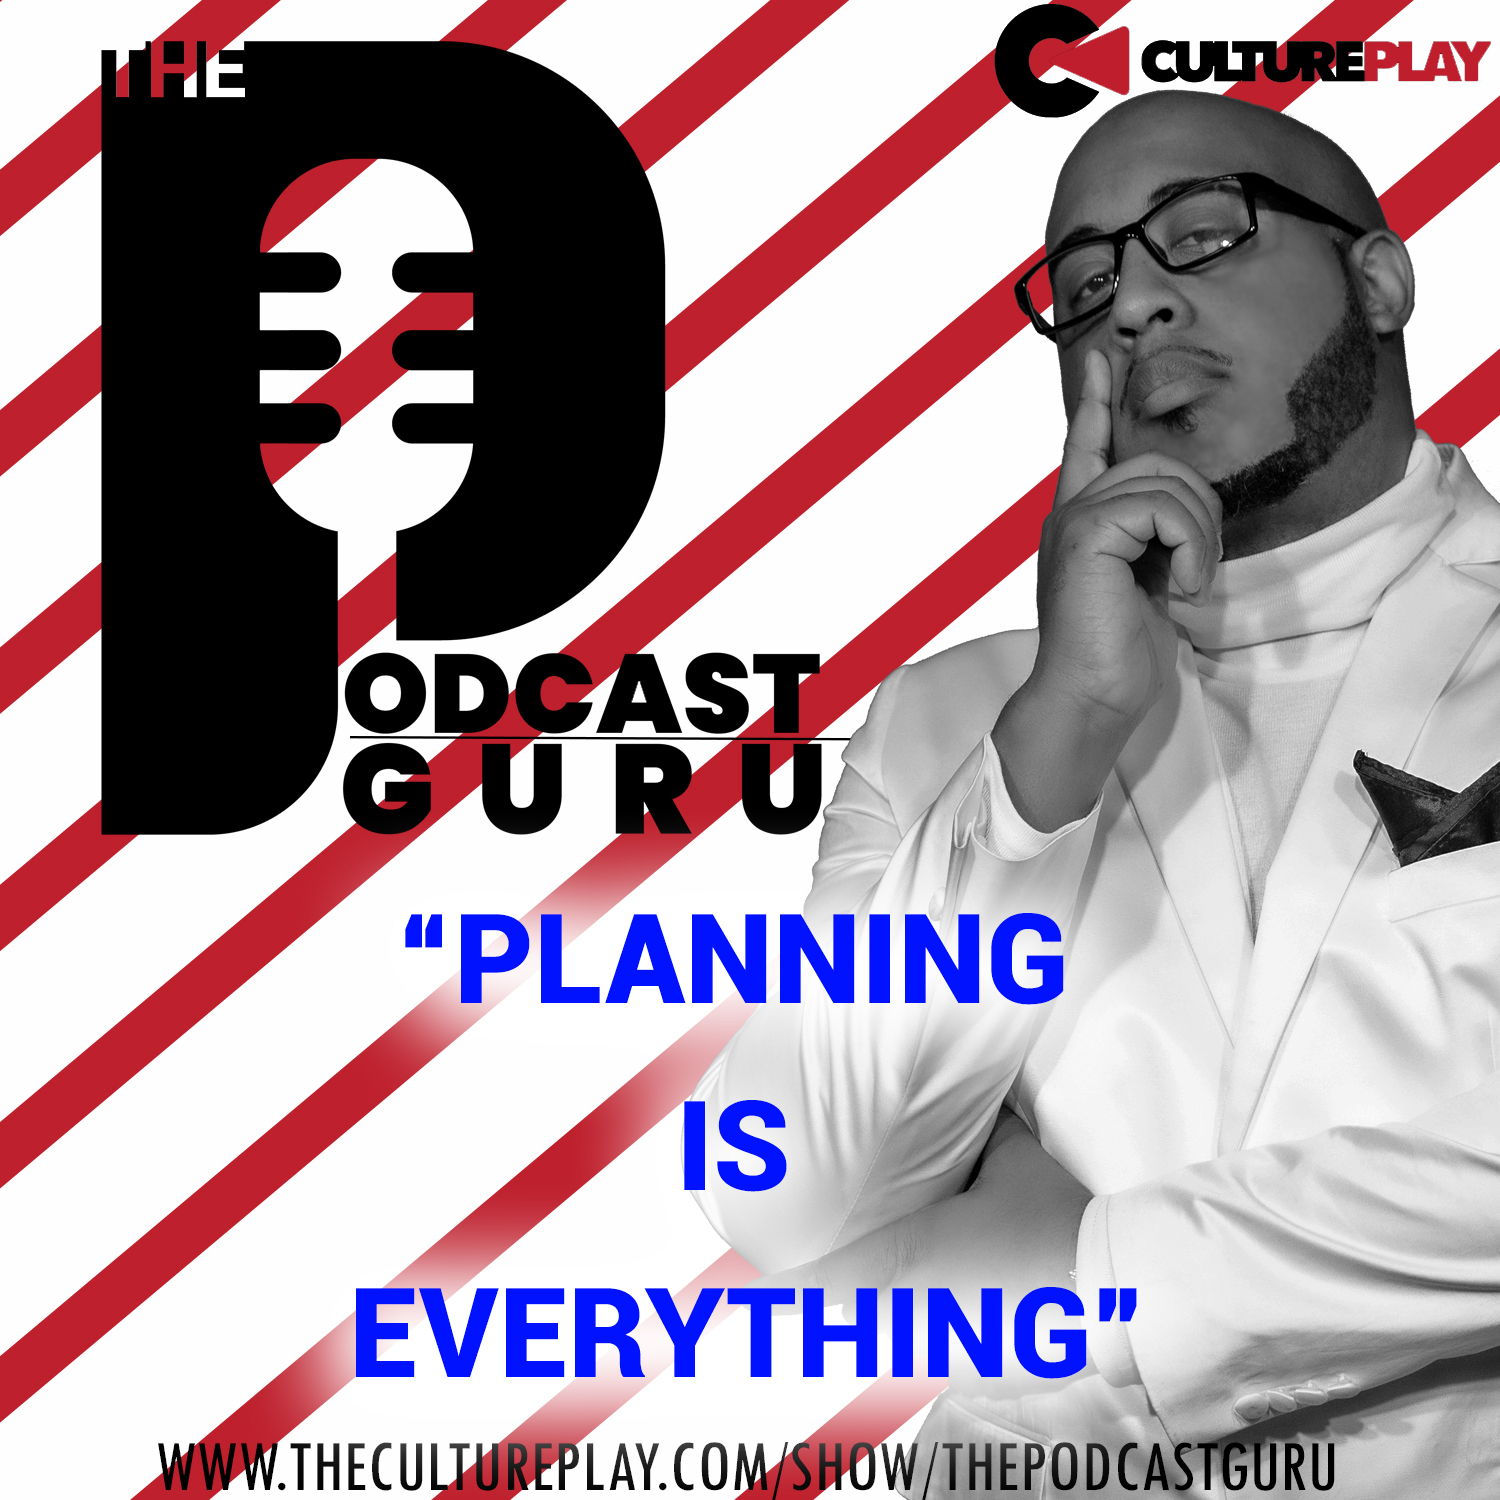 Podcast Guru - Planning Is Everything